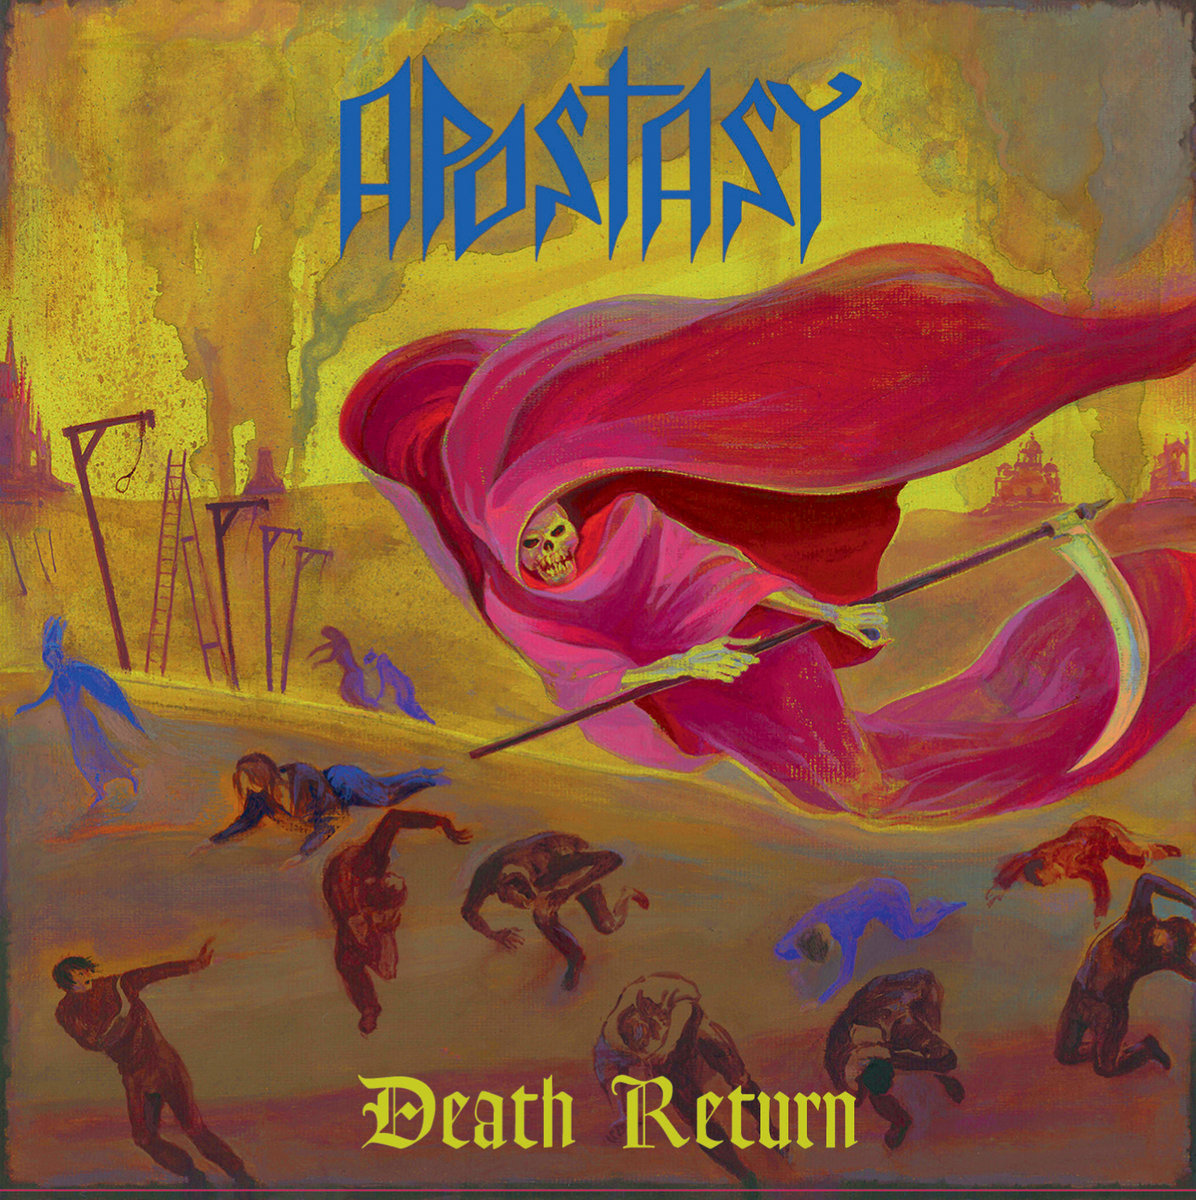 apostasy – death return